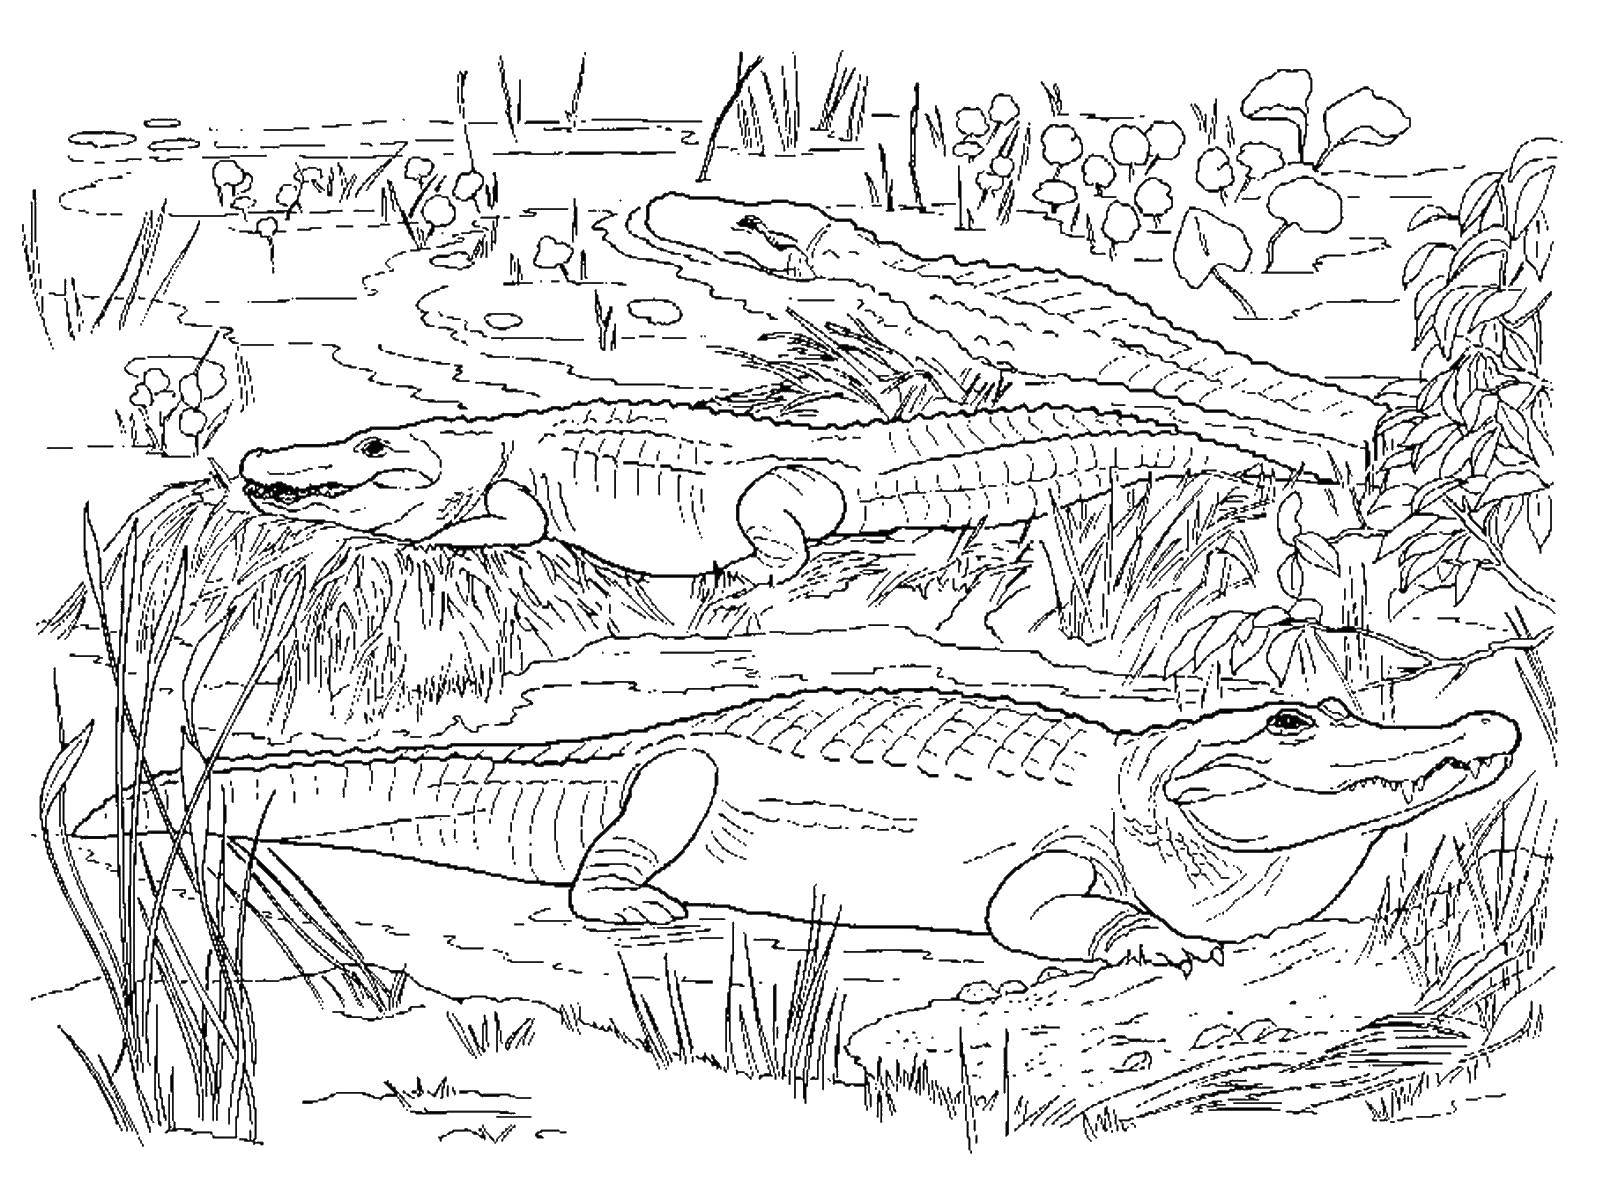 Coloring Three crocodile. Category Wild animals. Tags:  crocodile, grass, reeds.